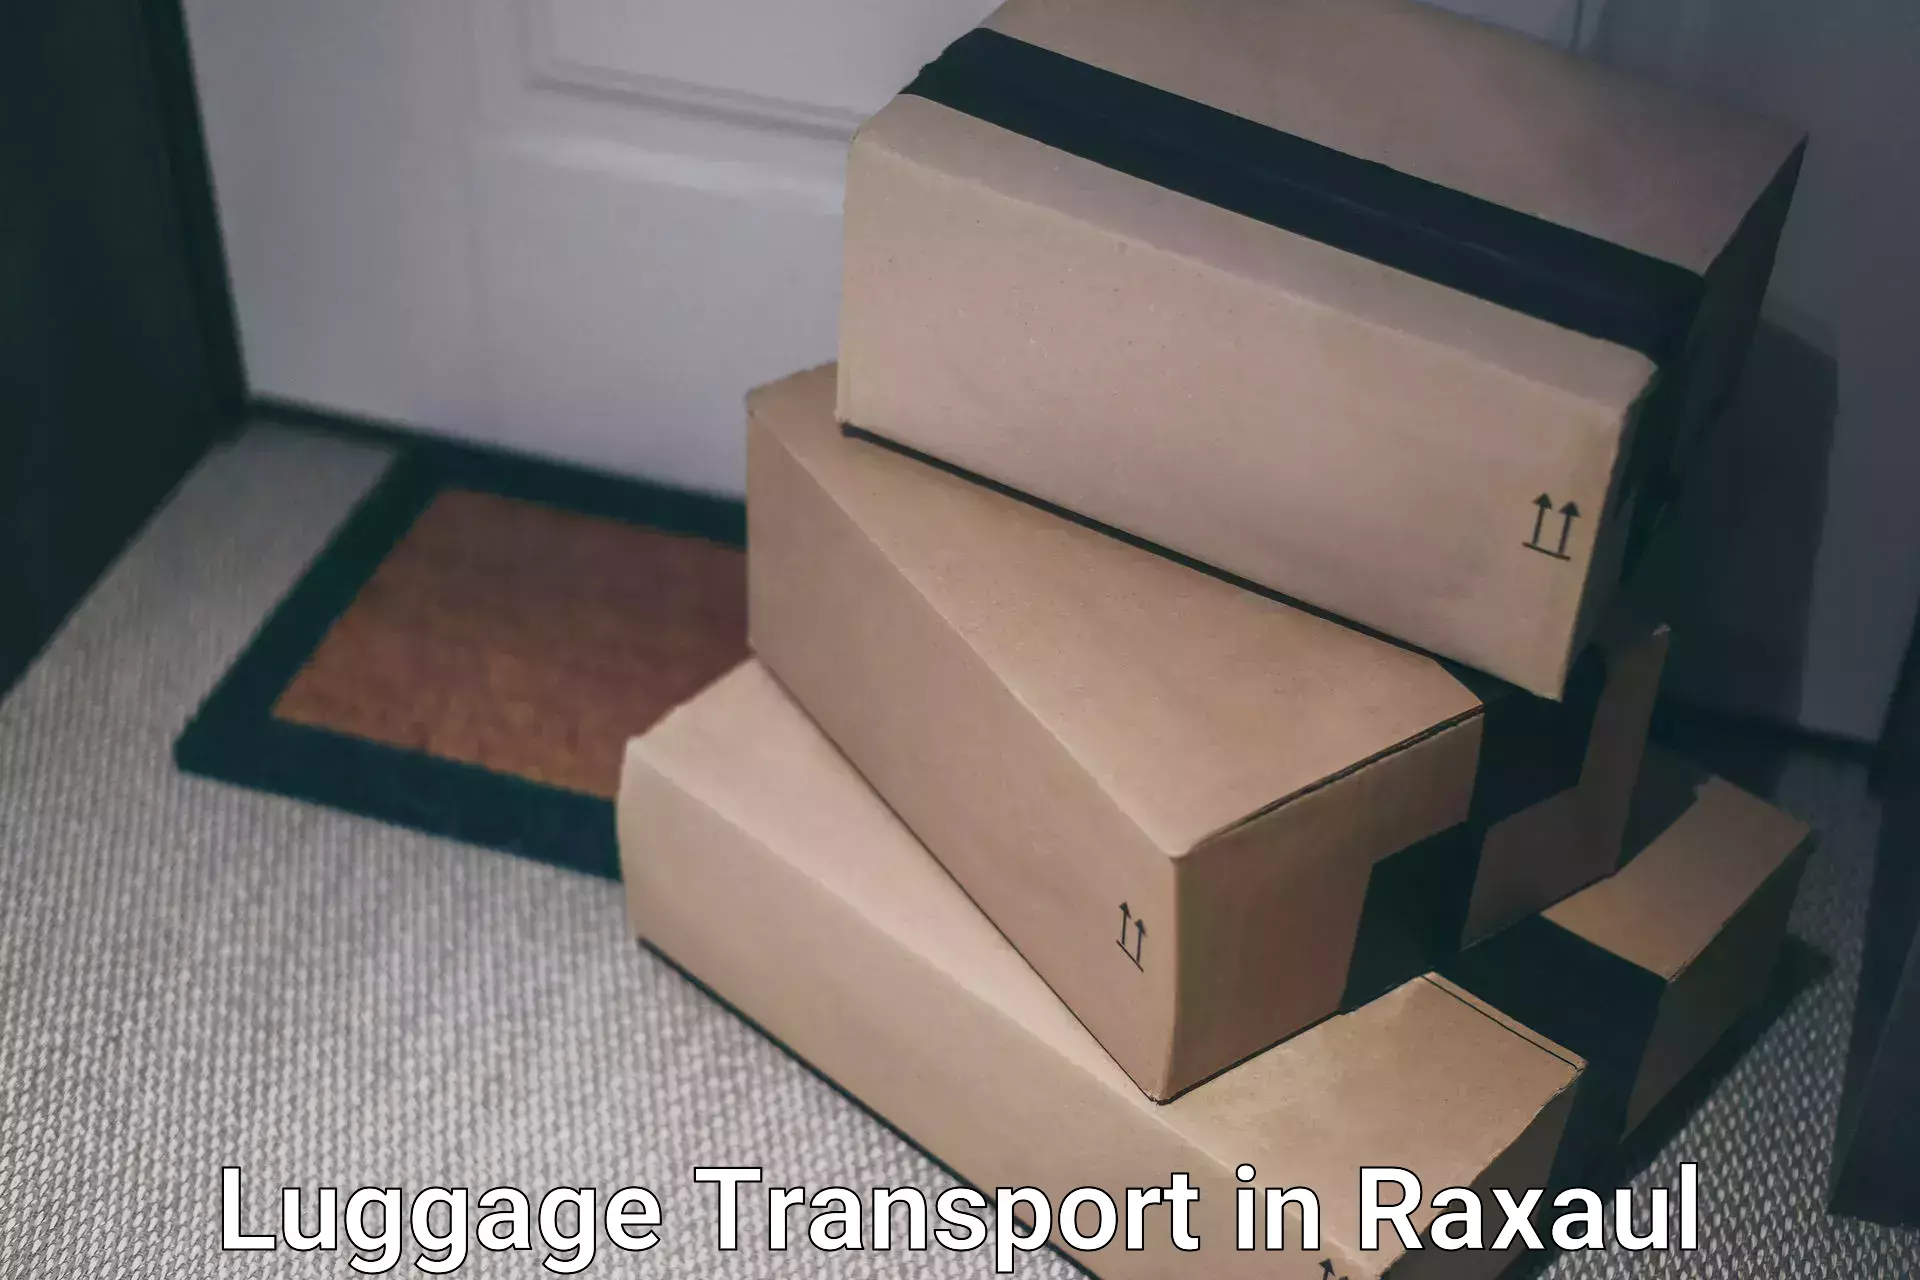 Same day baggage transport in Raxaul